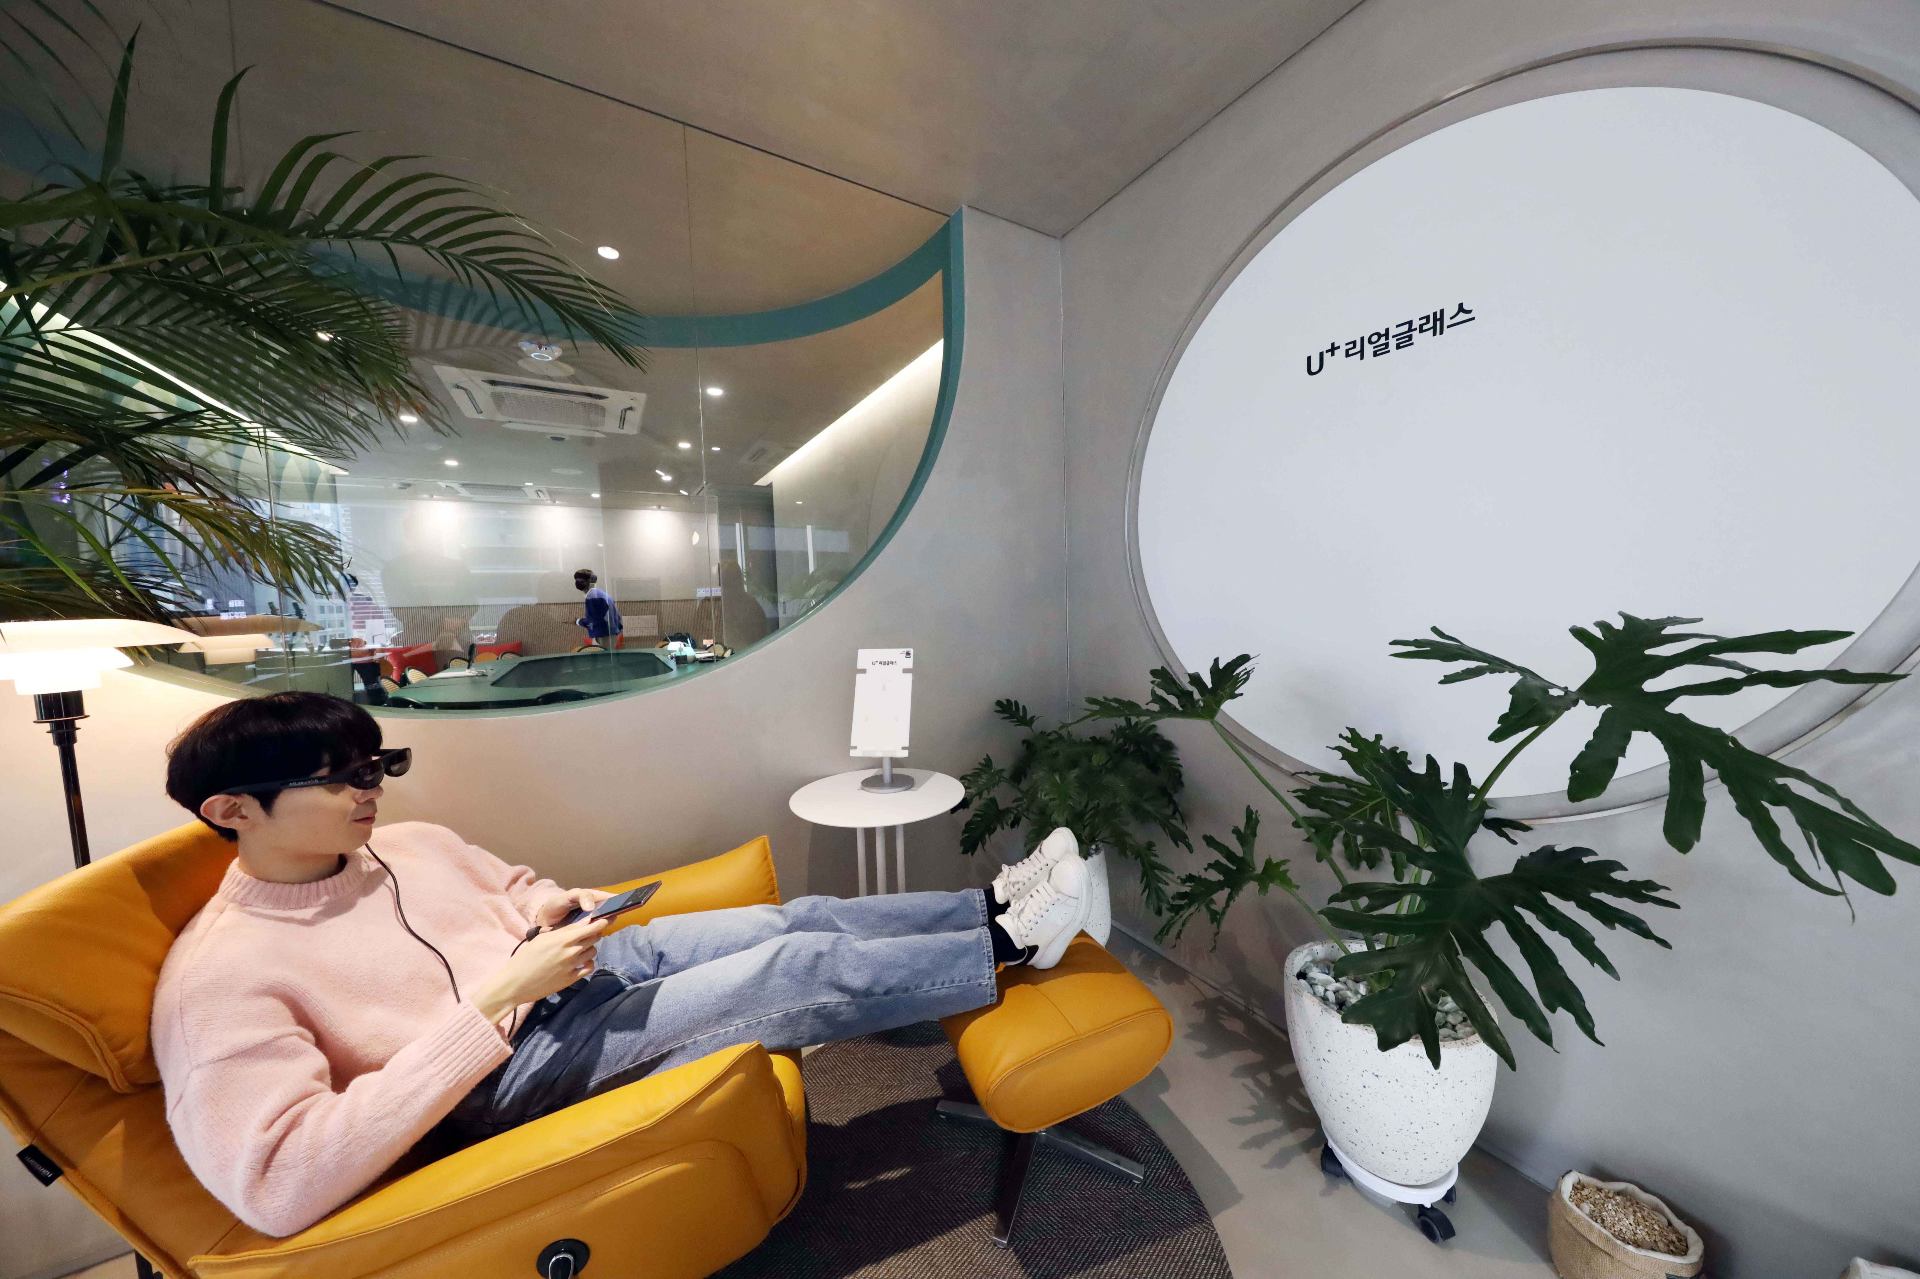 LG유플러스, 2030세대 겨냥해 서울 강남에 5G 복합문화공간 열어 